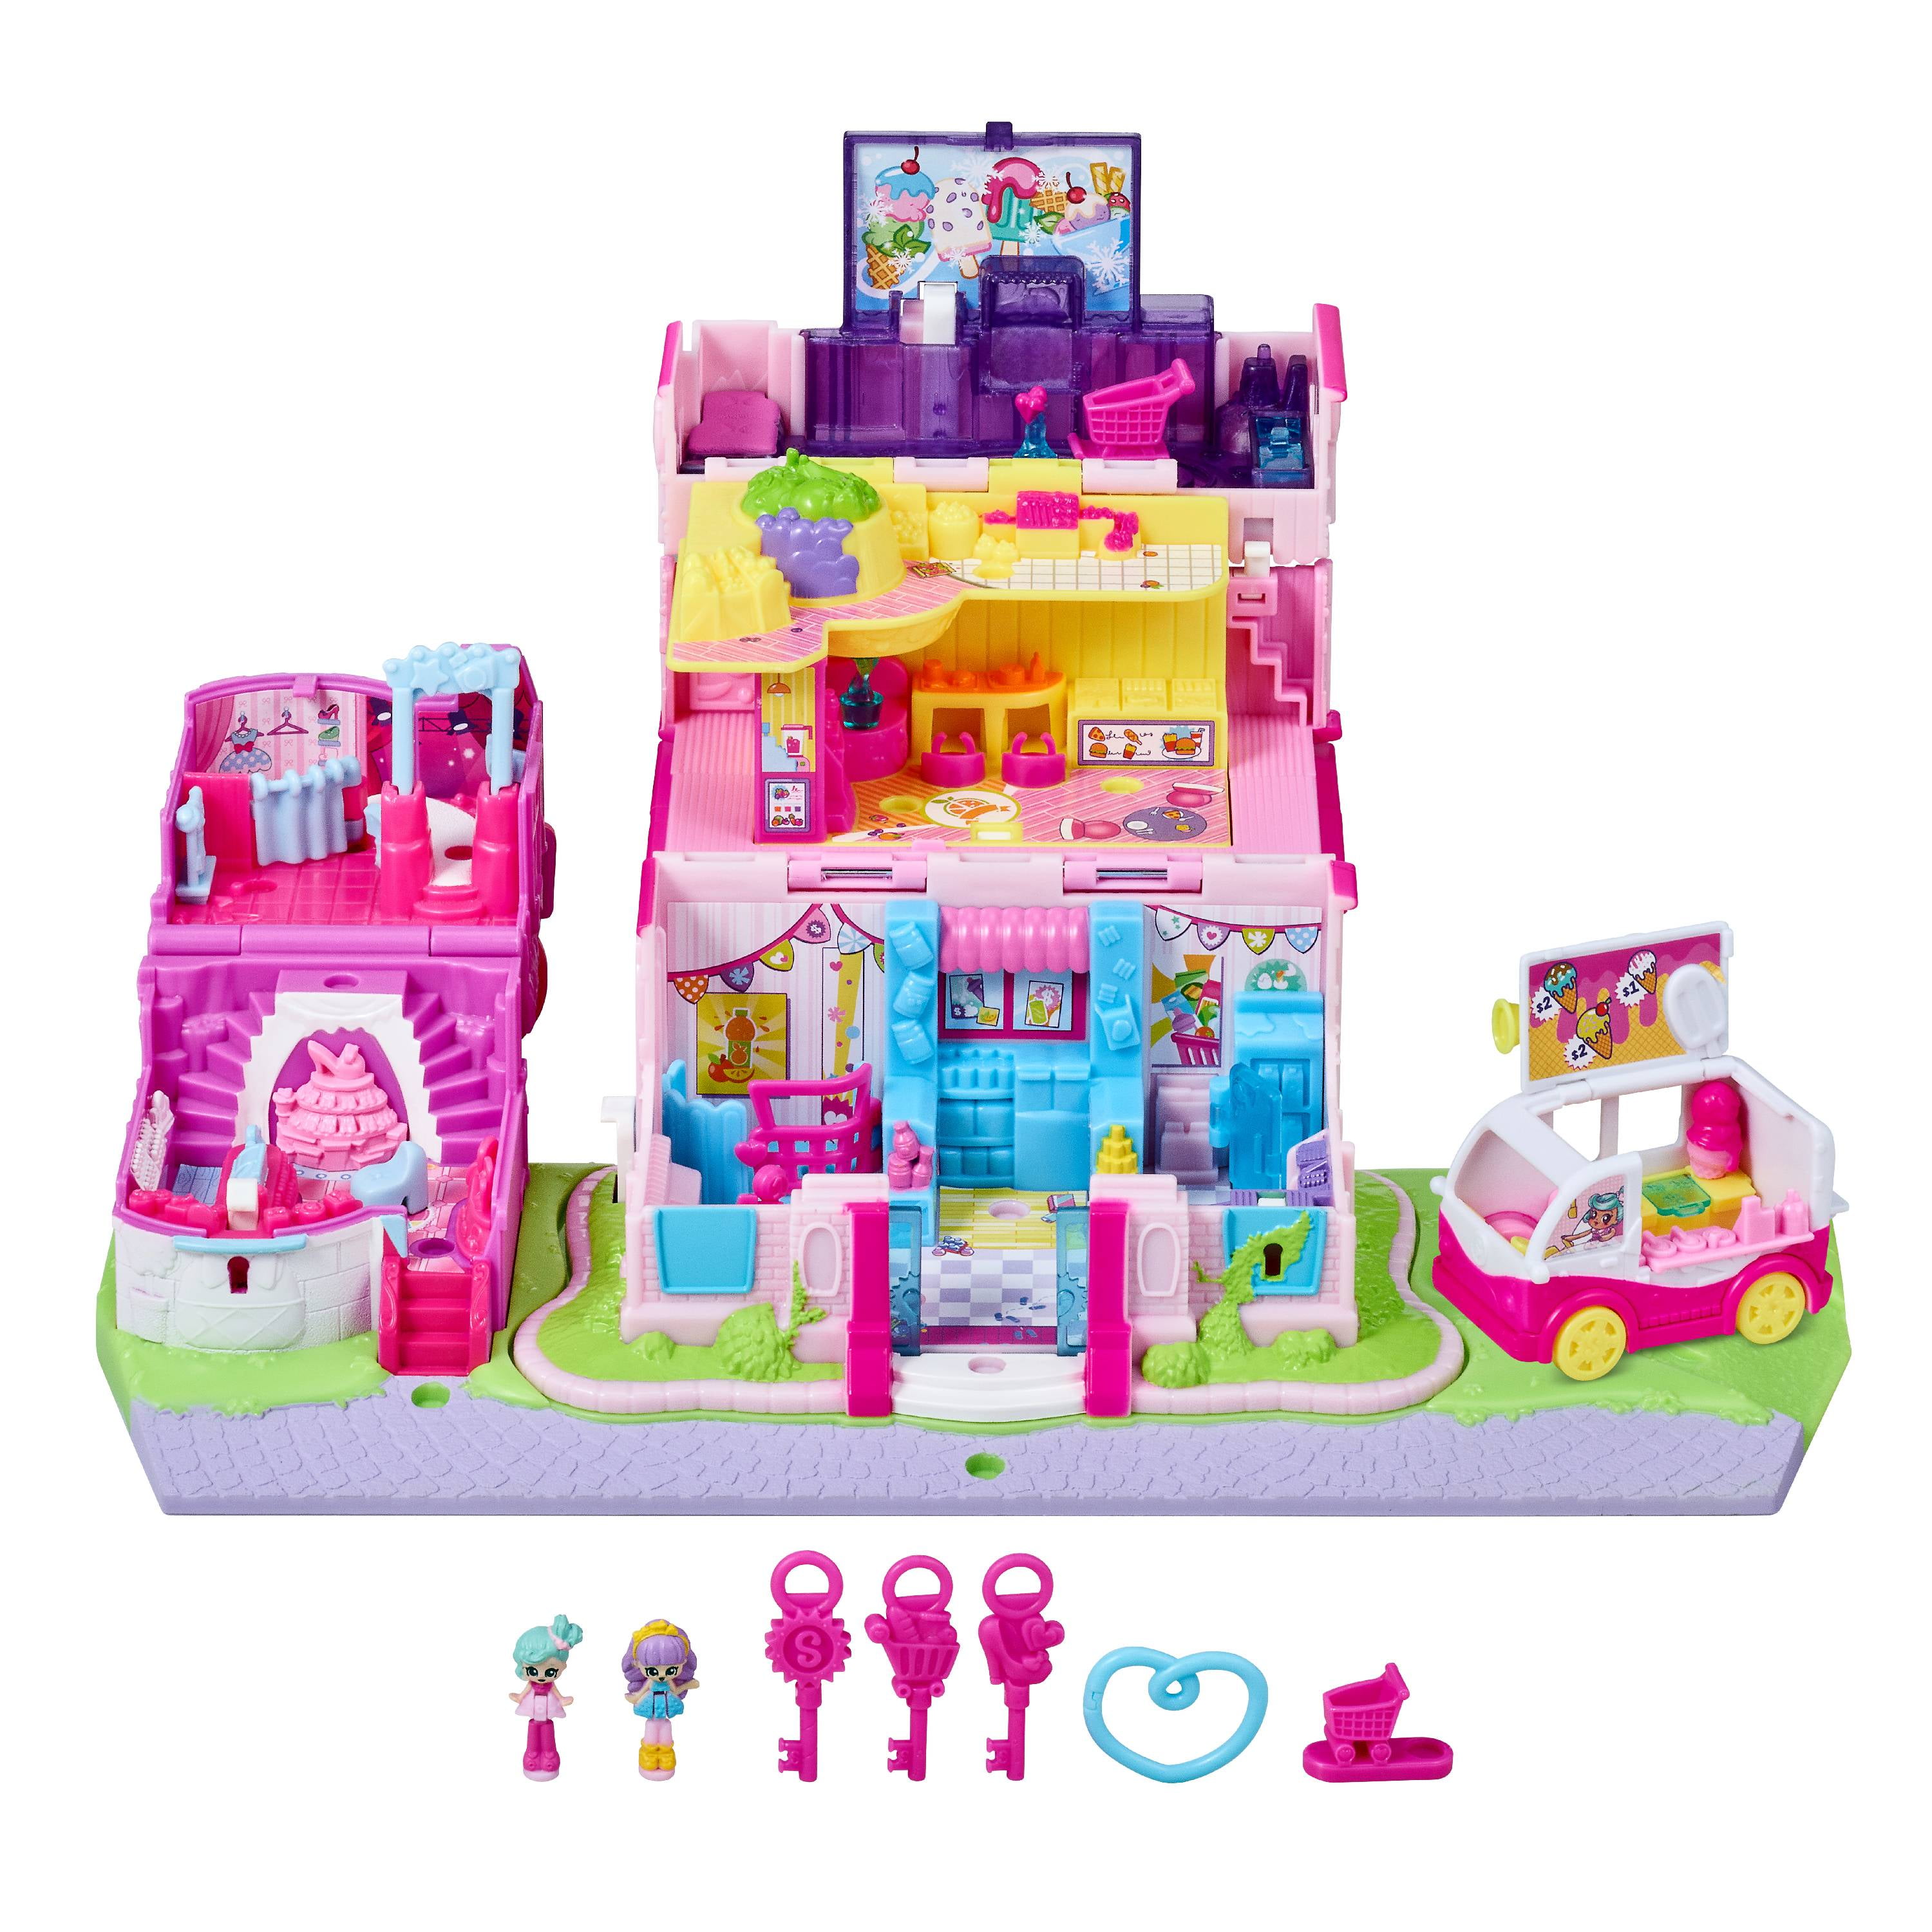 Moose Toys Shopkins Lil Secrets Secret Small Mall Playset 57482 for sale online 